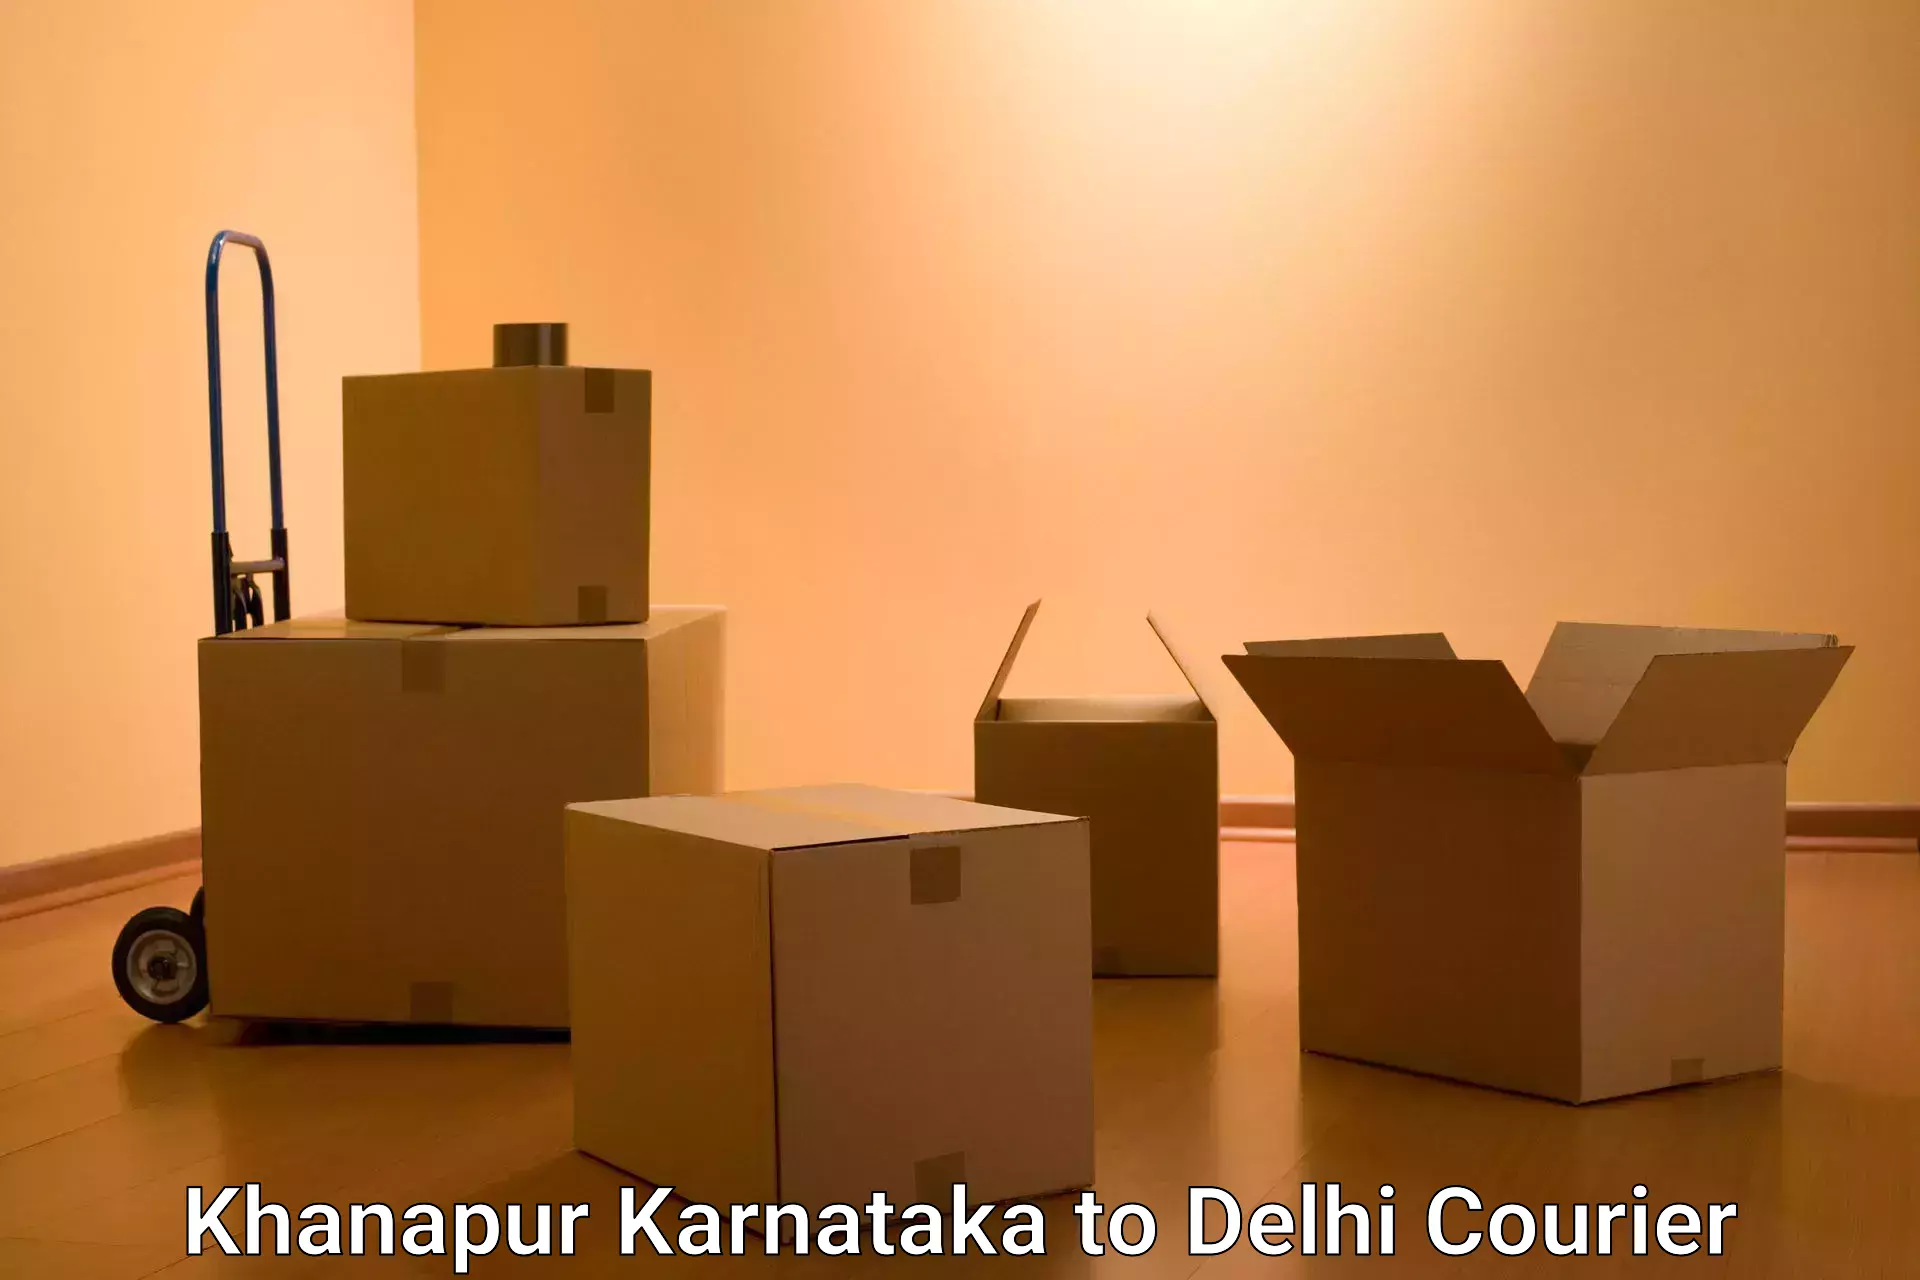 Automated parcel services Khanapur Karnataka to Lodhi Road